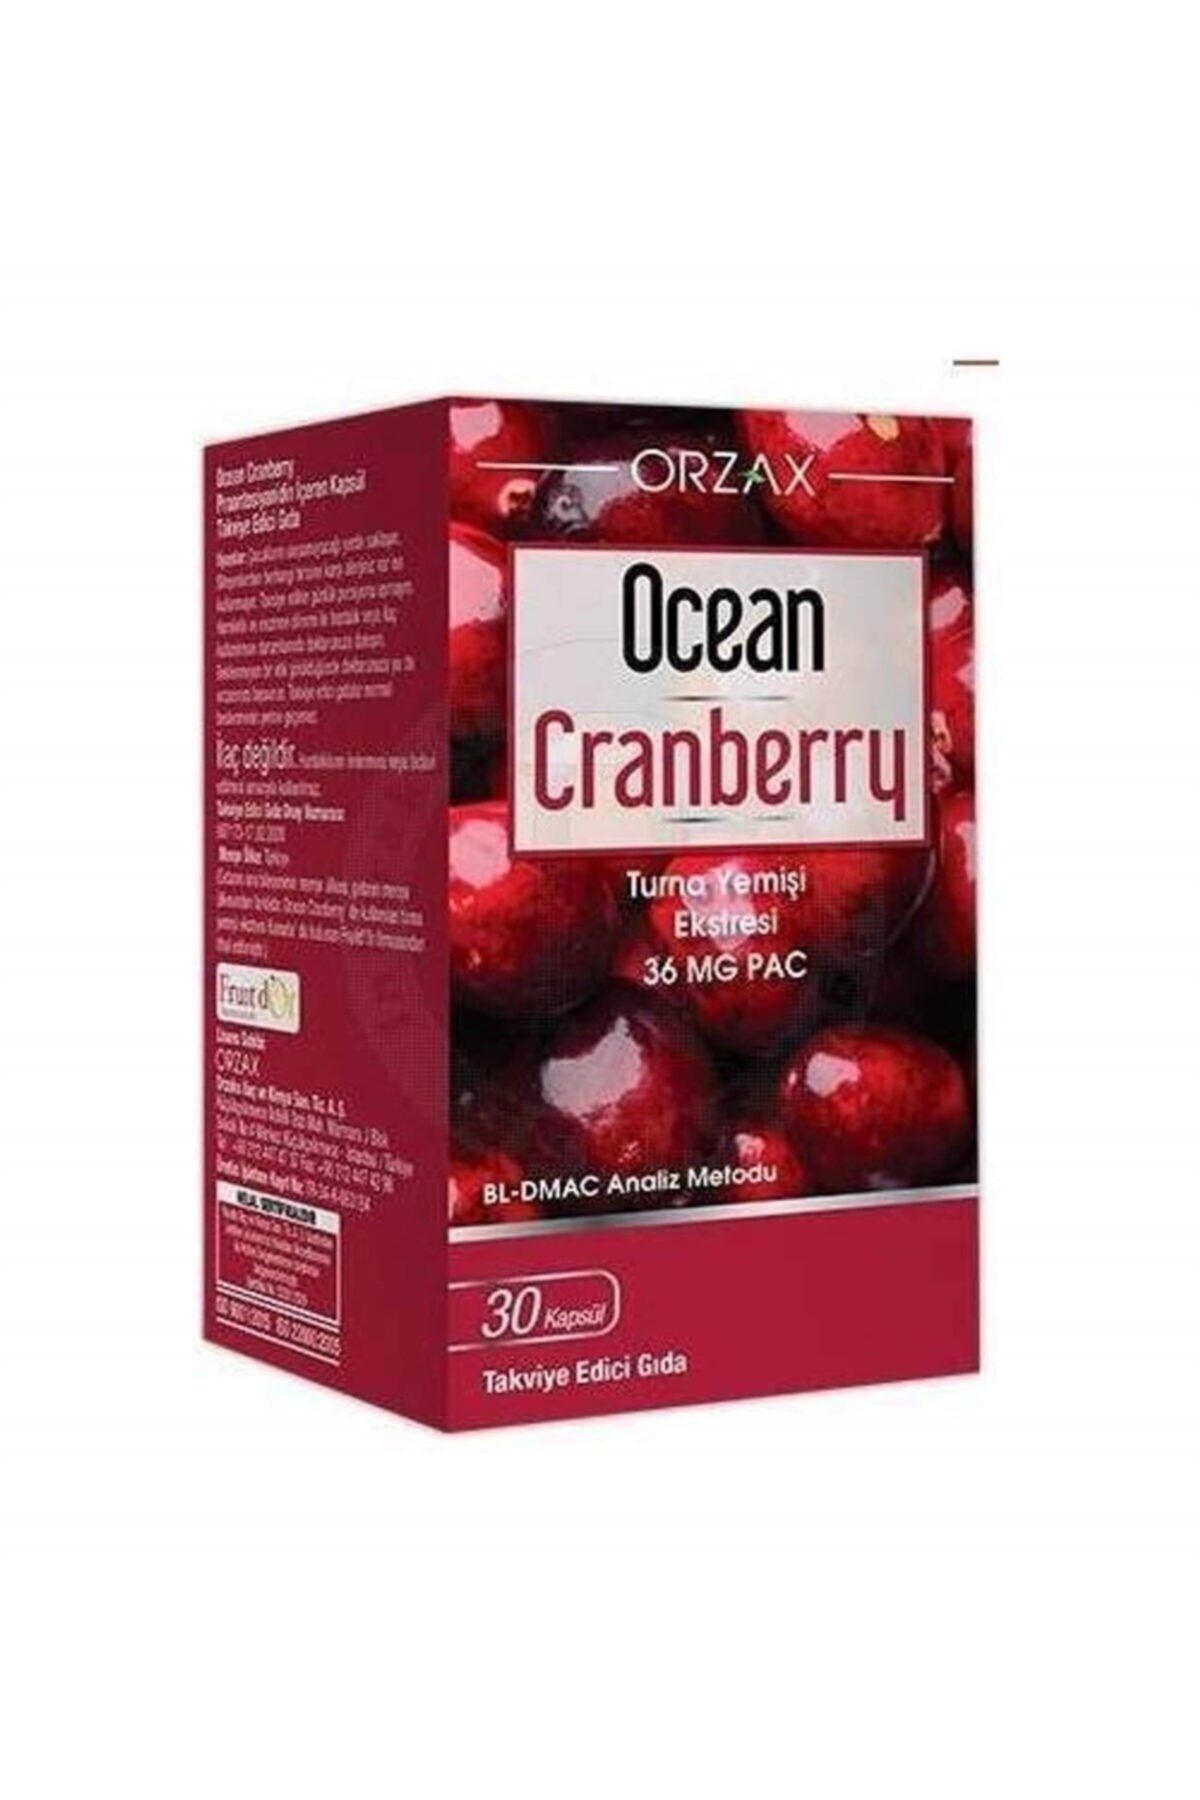 Ocean Cranberry Turna Yemişi Ekstresi 36 Mg Pac 30 Kapsül